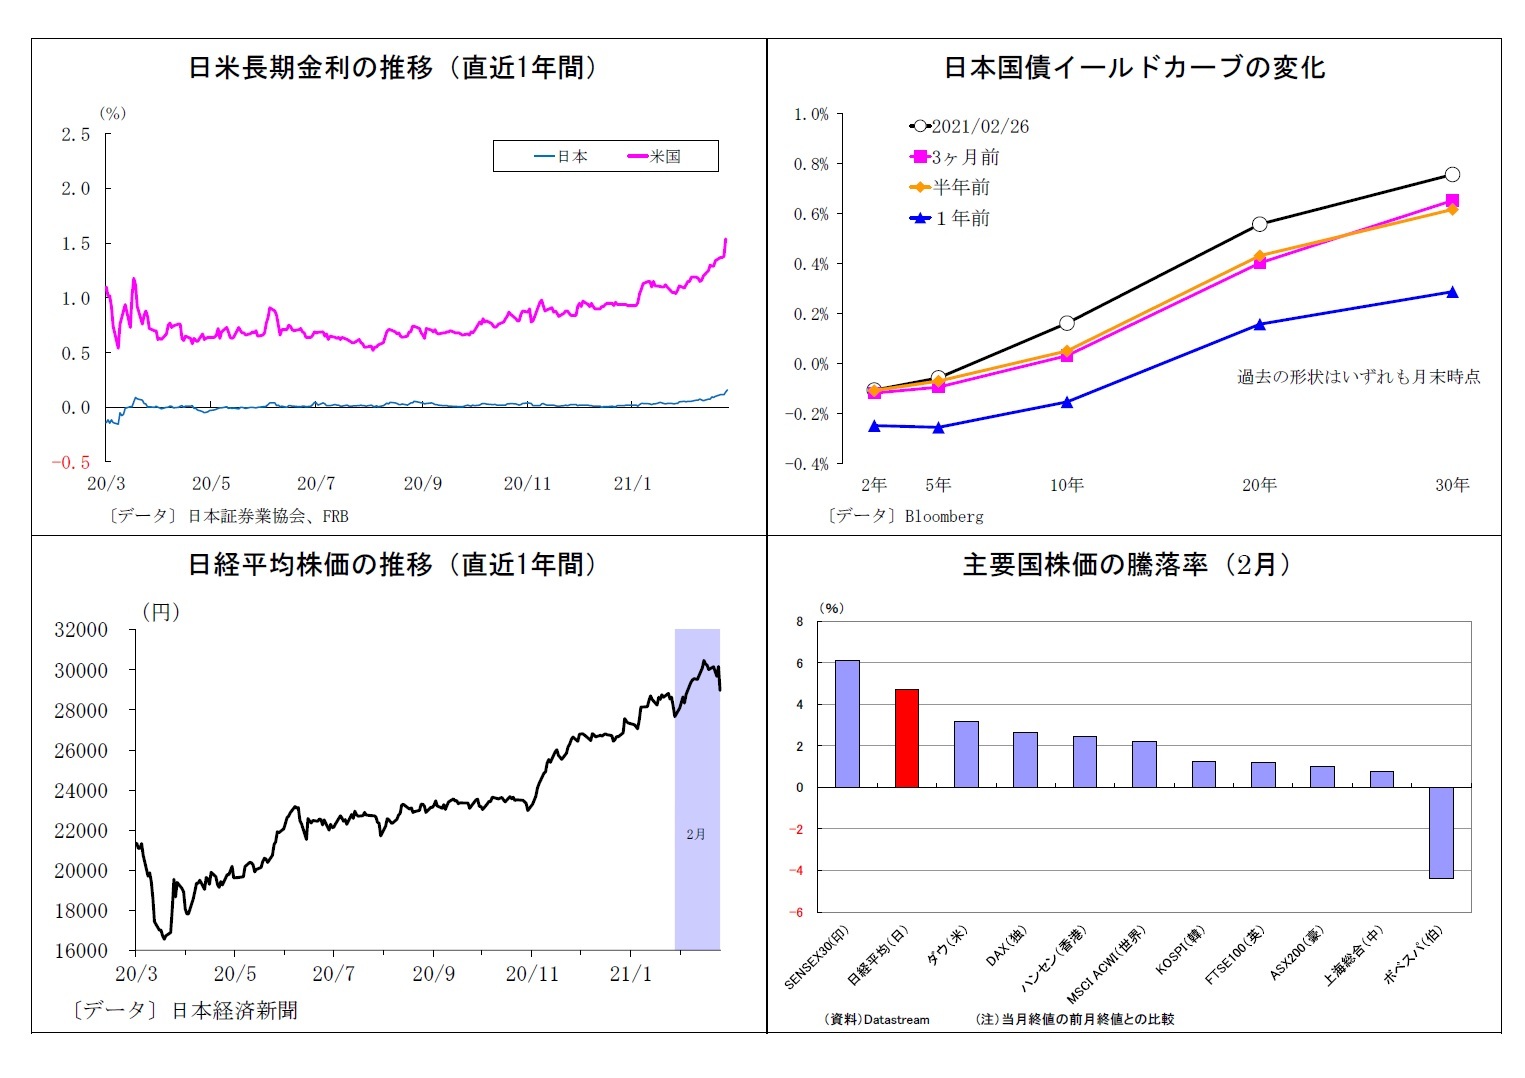 日米長期金利の推移（直近1年間）/日本国債イールドカーブの変化/日経平均株価の推移（直近1年間）/主要国株価の騰落率（2月）